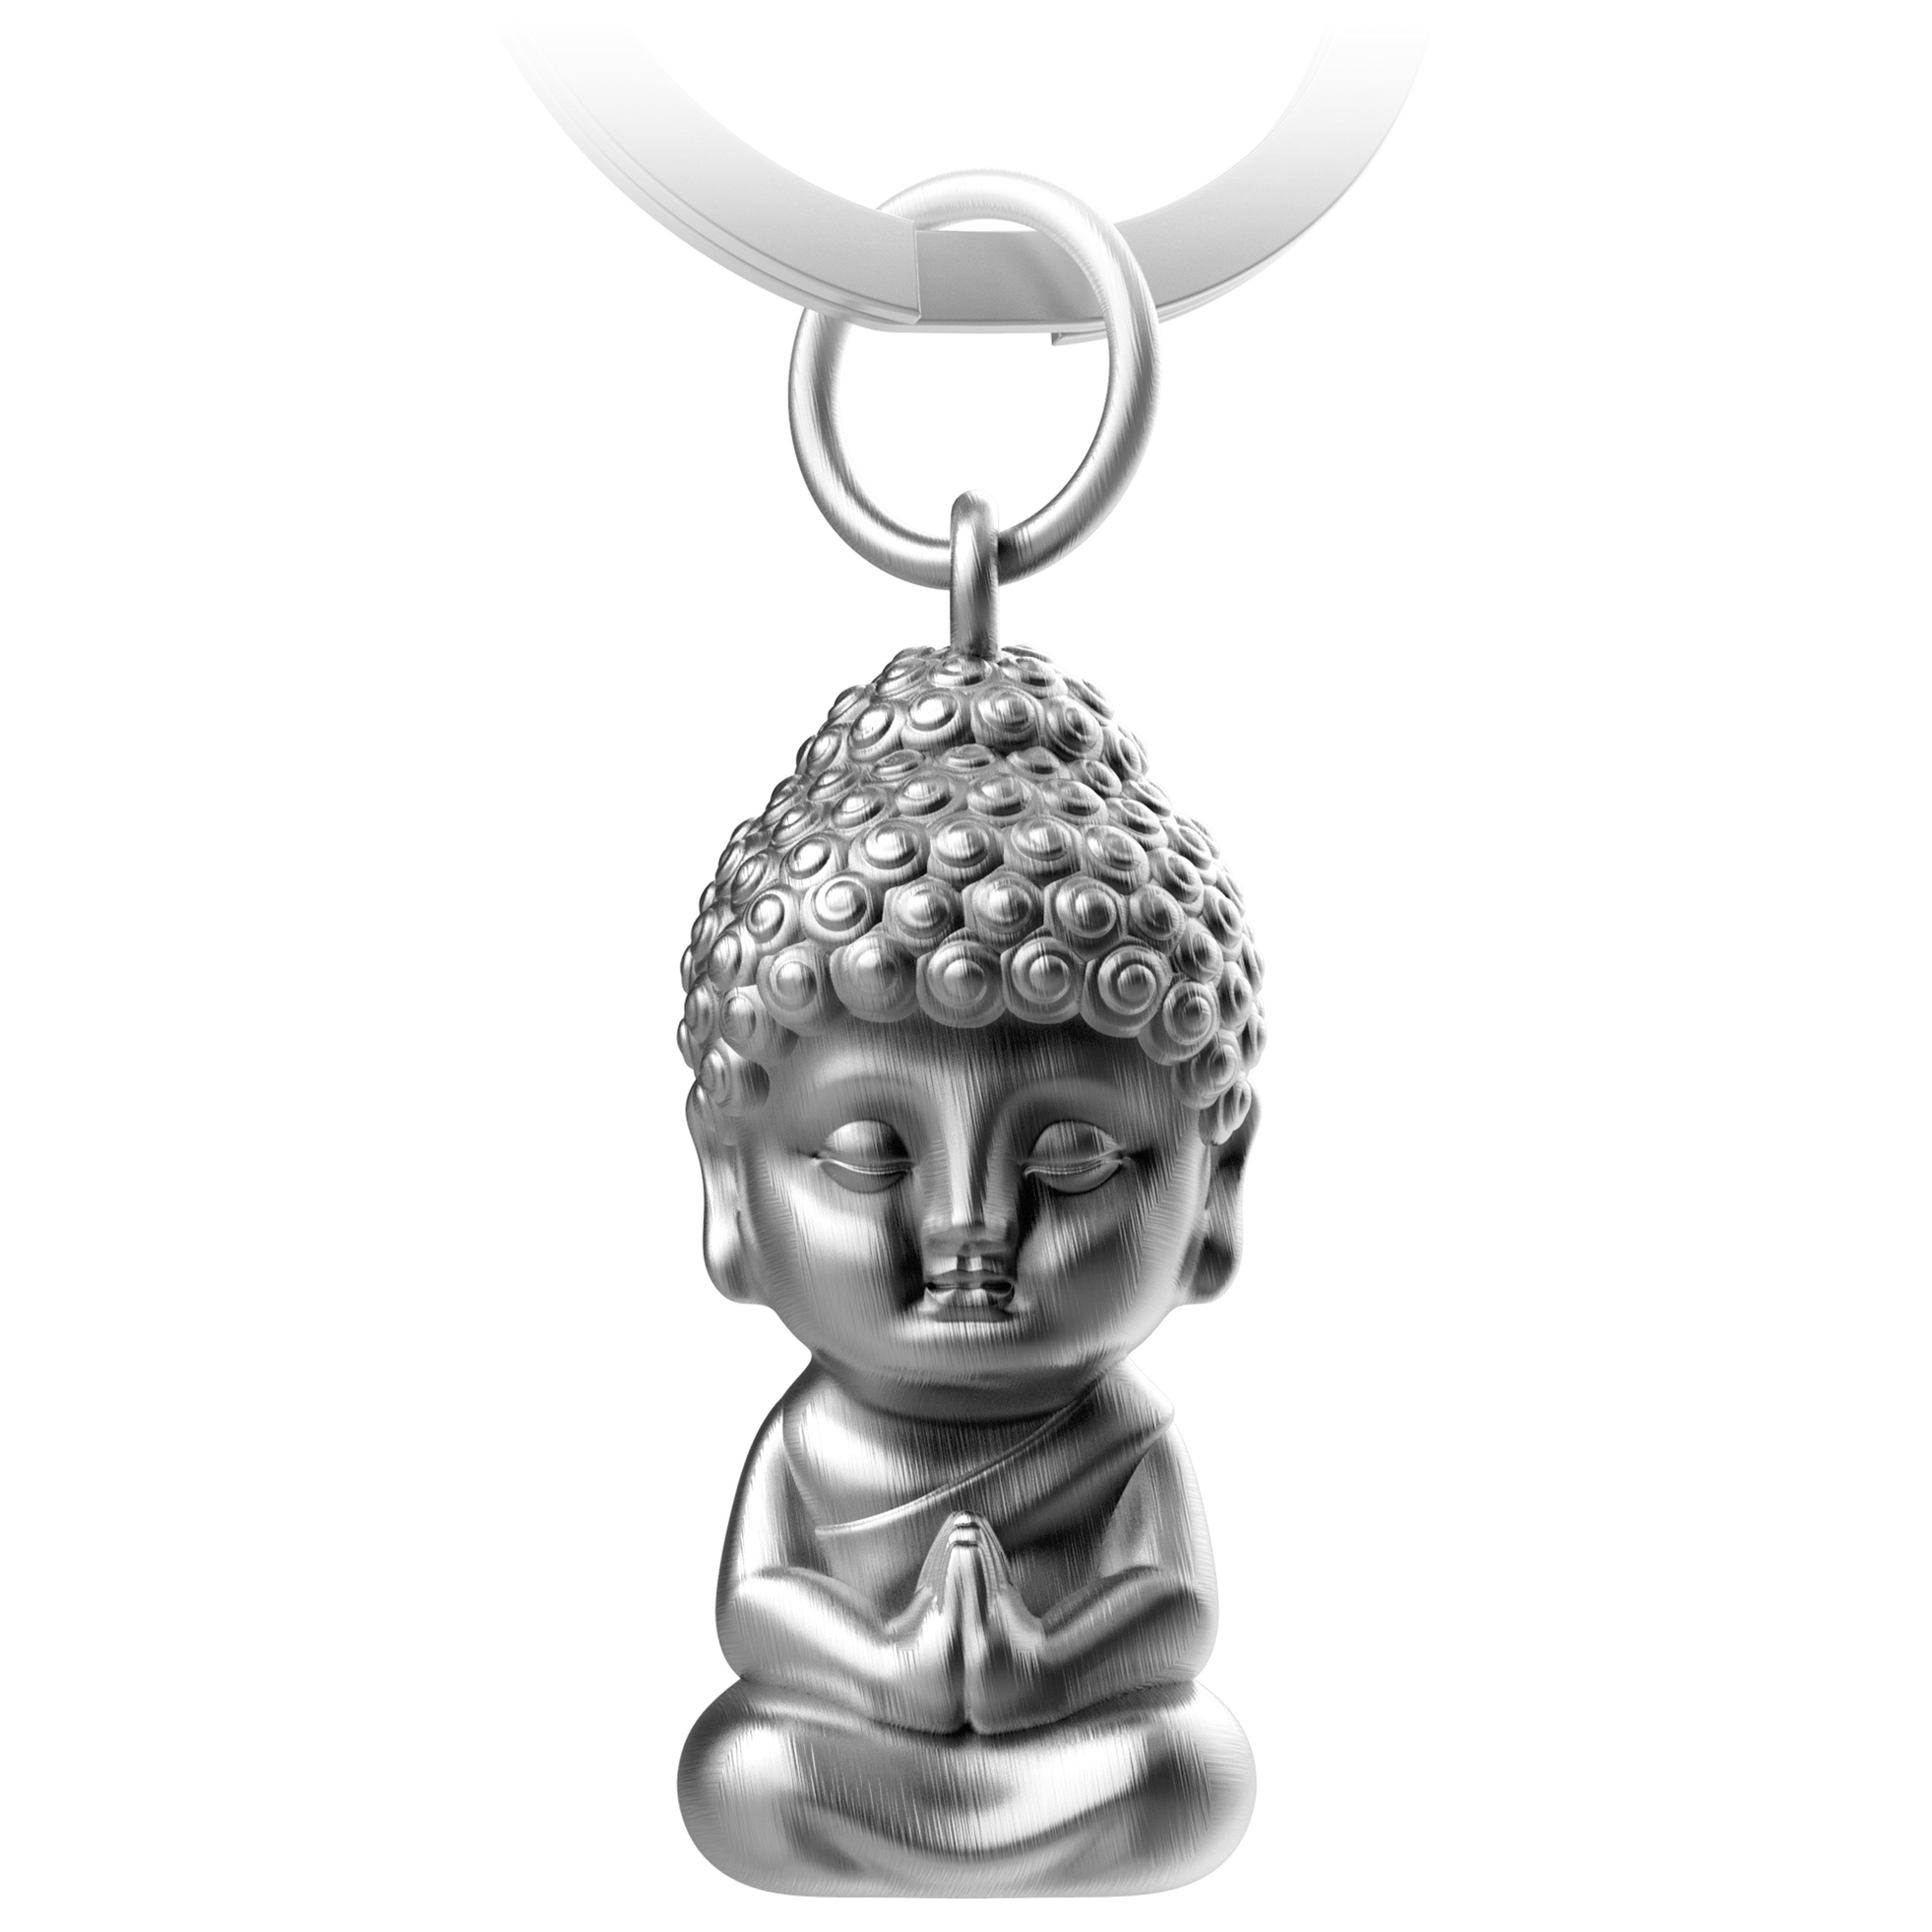 FABACH Schlüsselanhänger Buddha aus Metall - Karma Anhänger - Mini-Buddha Glücksbringer Antique Silber